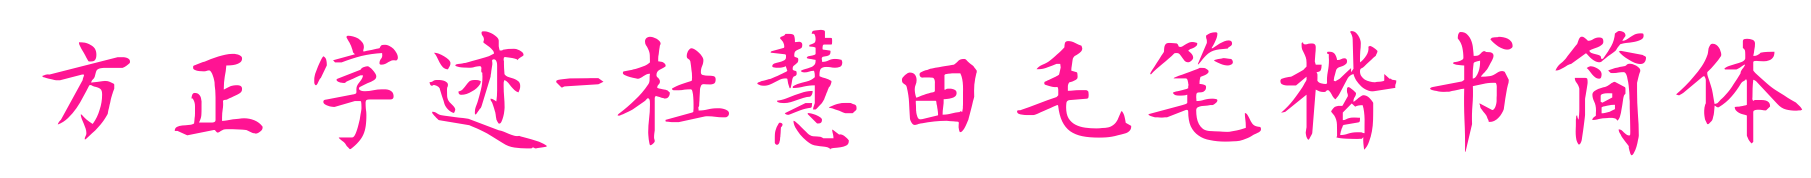  Founder's handwriting - Du Huitian's brush regular script simplified